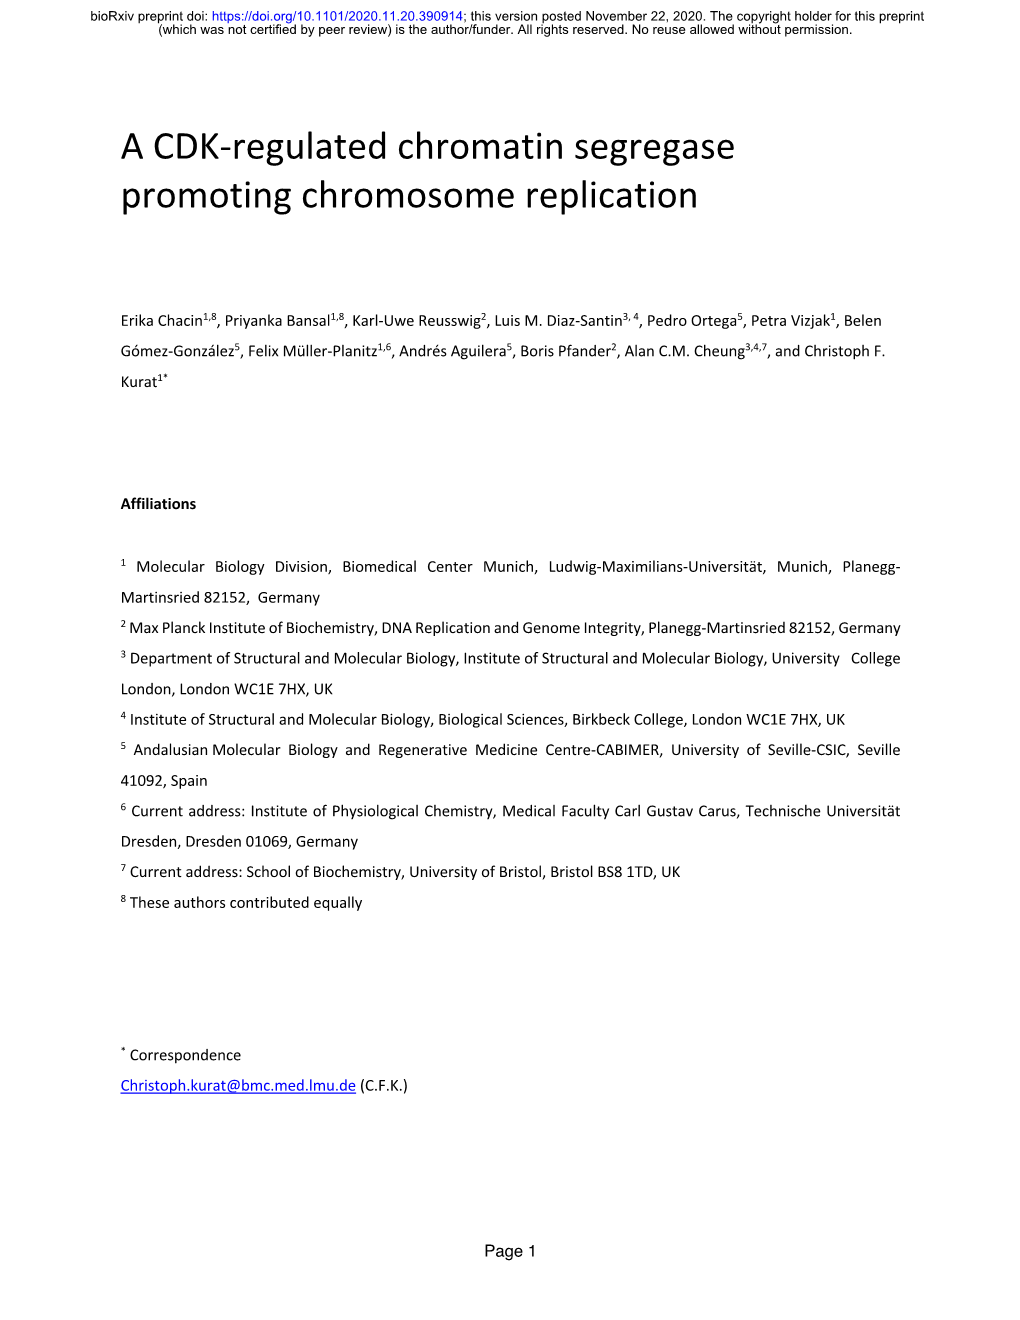 A CDK-Regulated Chromatin Segregase Promoting Chromosome Replication